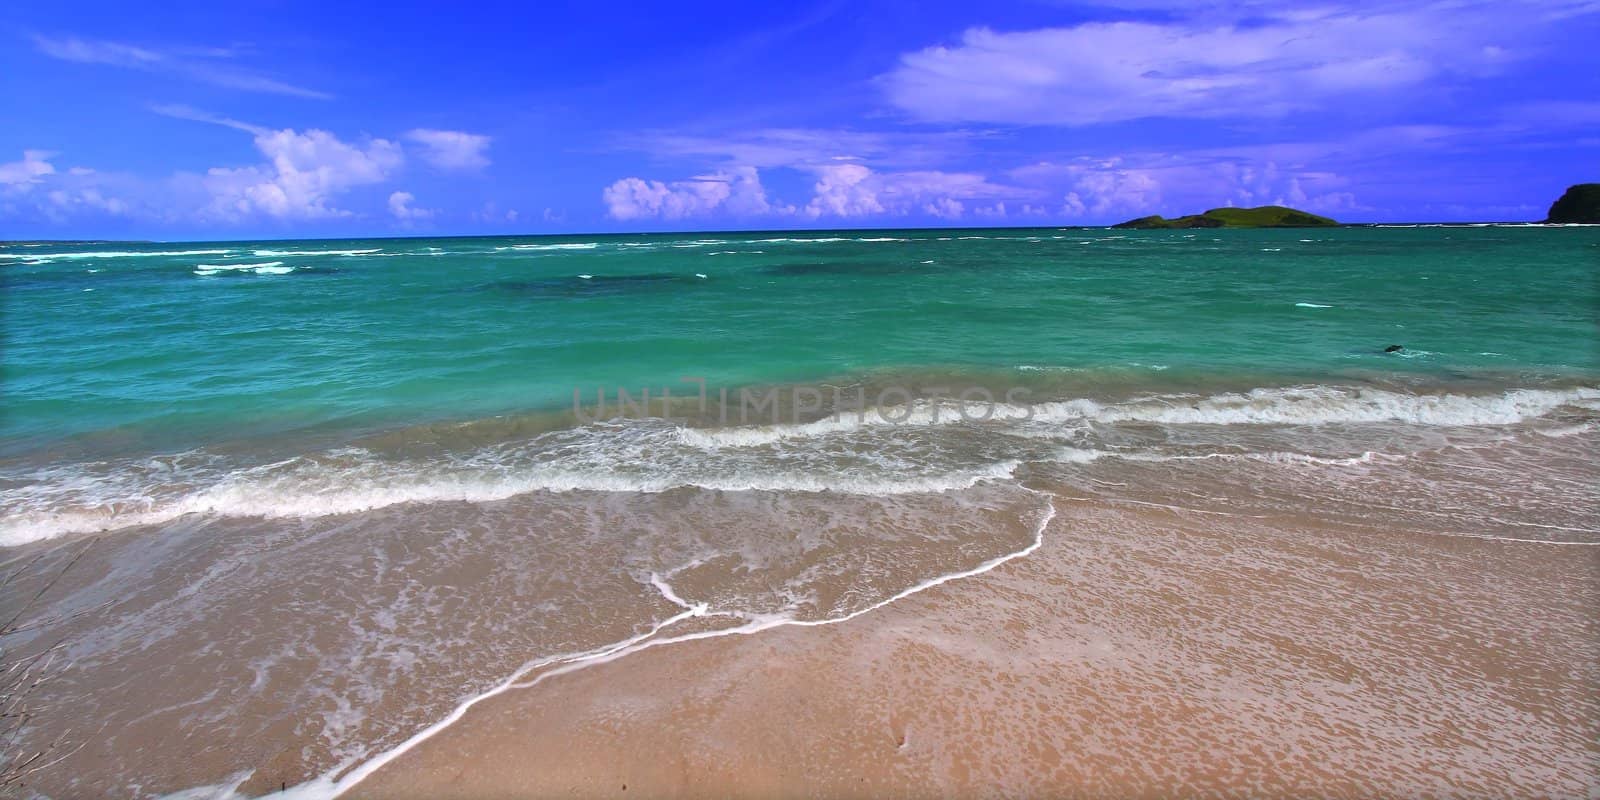 A beautiful beach on the Caribbean island of Saint Lucia.